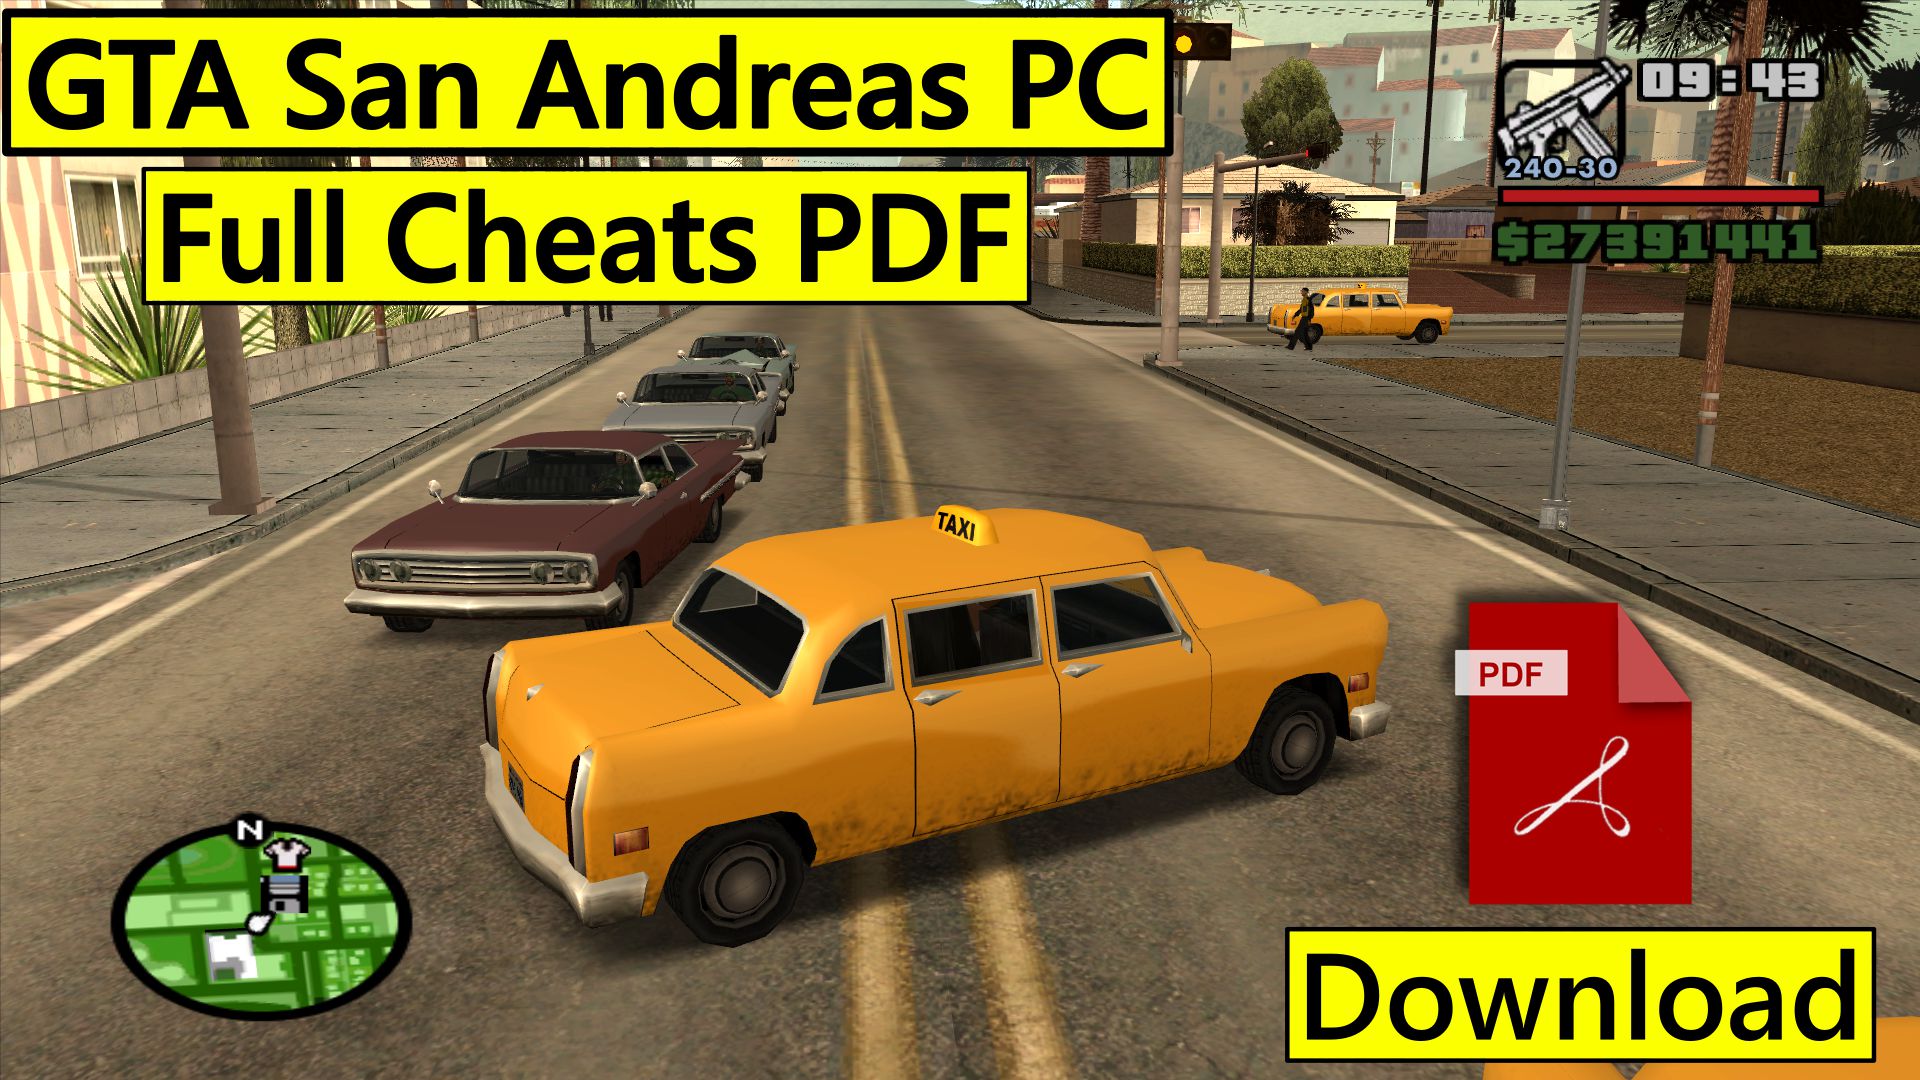 GTA San Andreas PC full cheats pdf Download